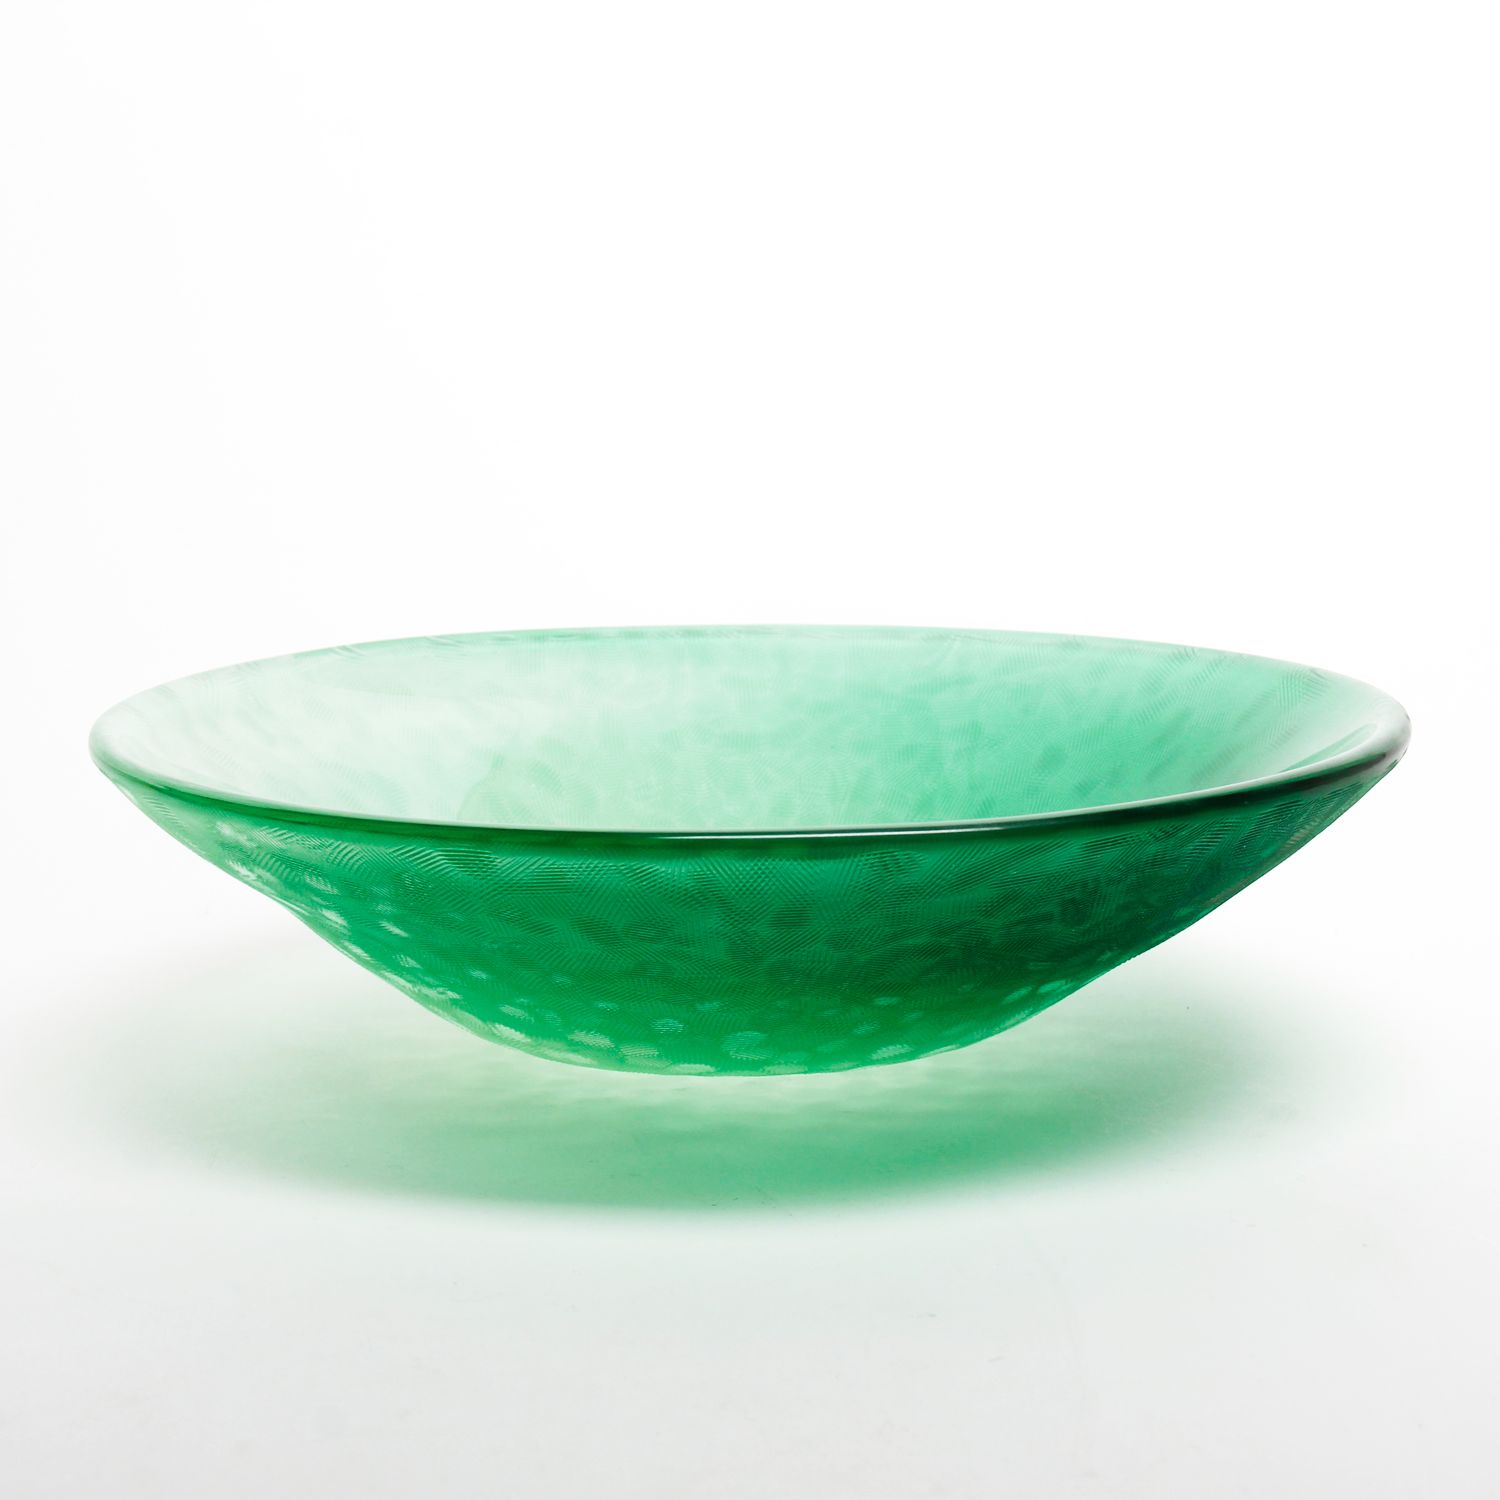 Gordon Boyd: Crosshatch Bowl in Green Product Image 2 of 3